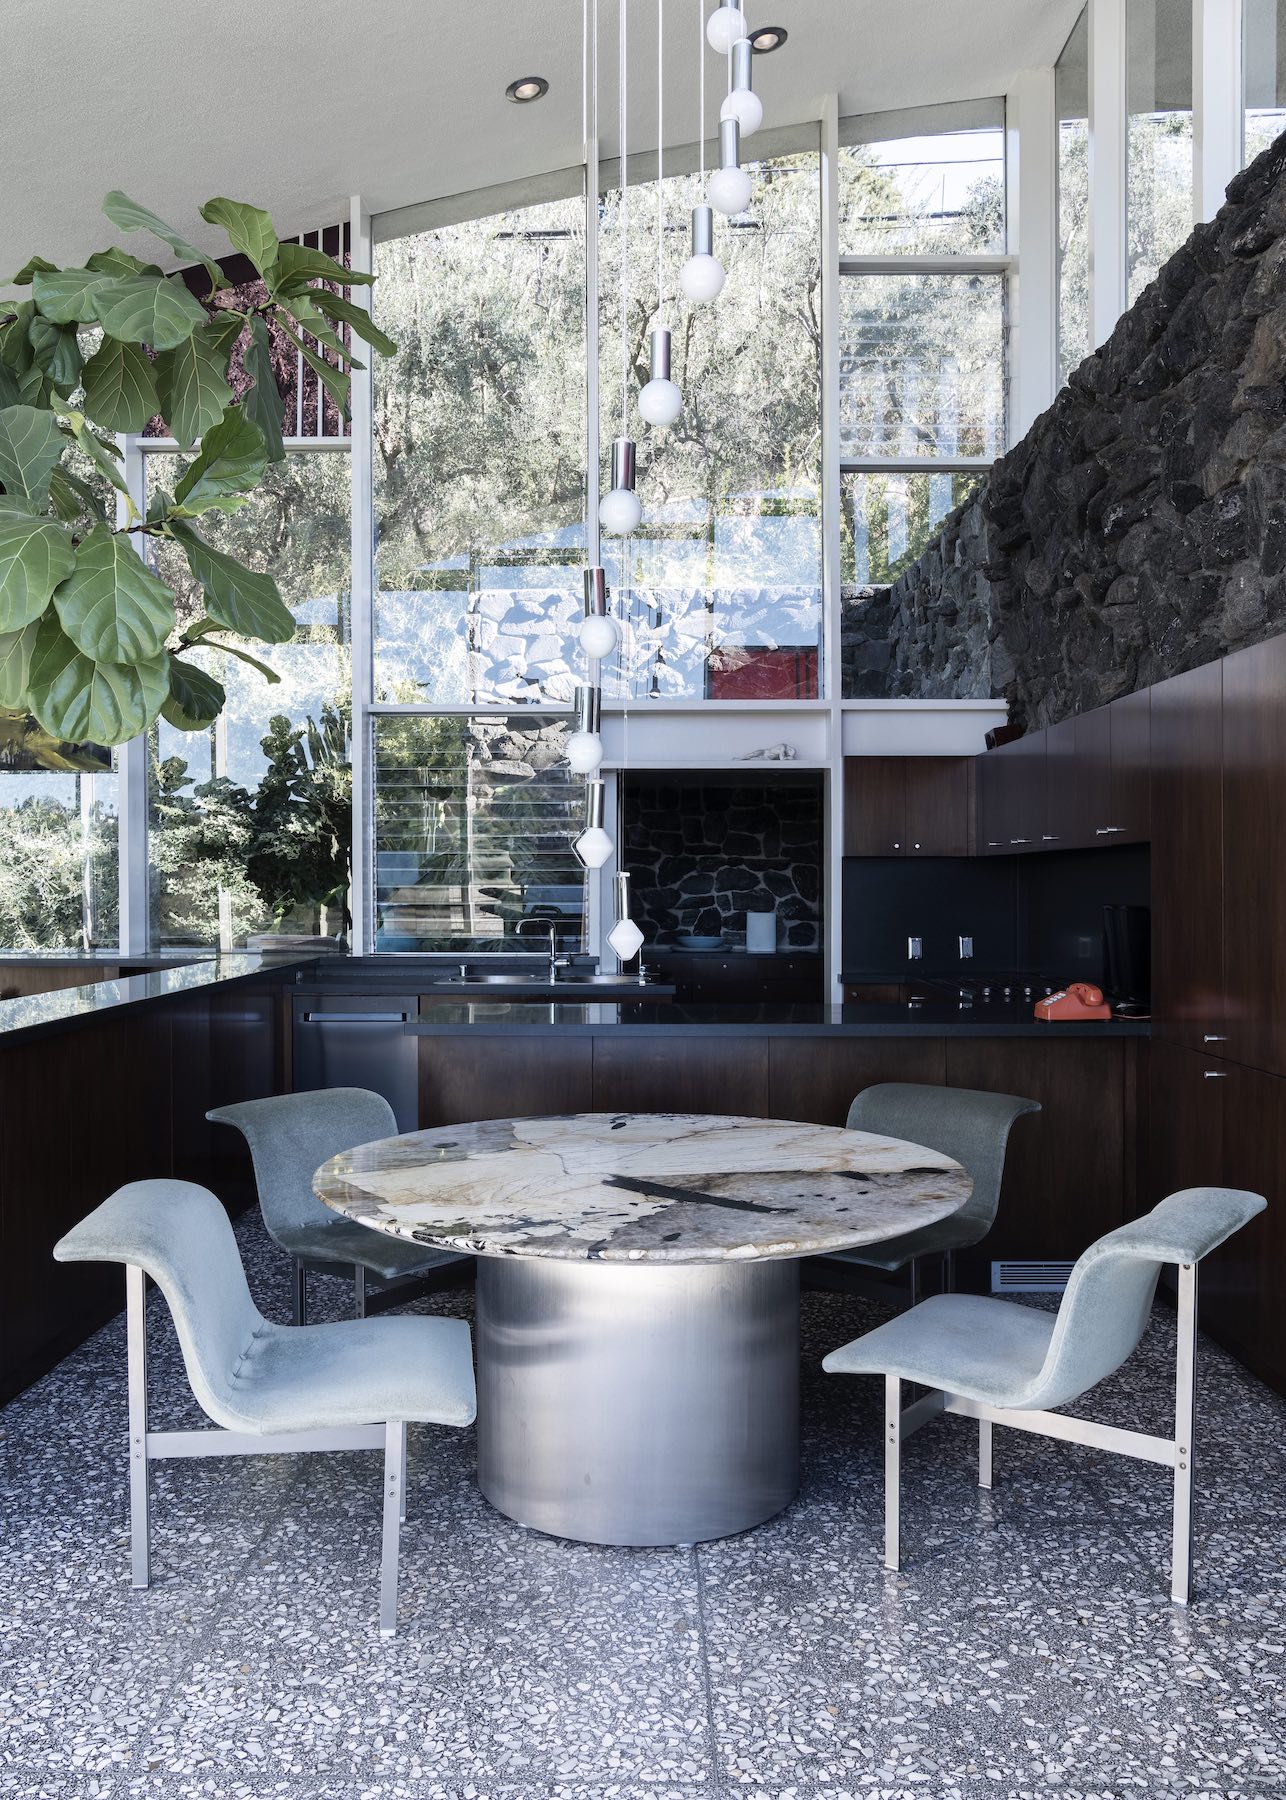 Kitchen of Garcia House by architect John Lautner in Effect Magazine